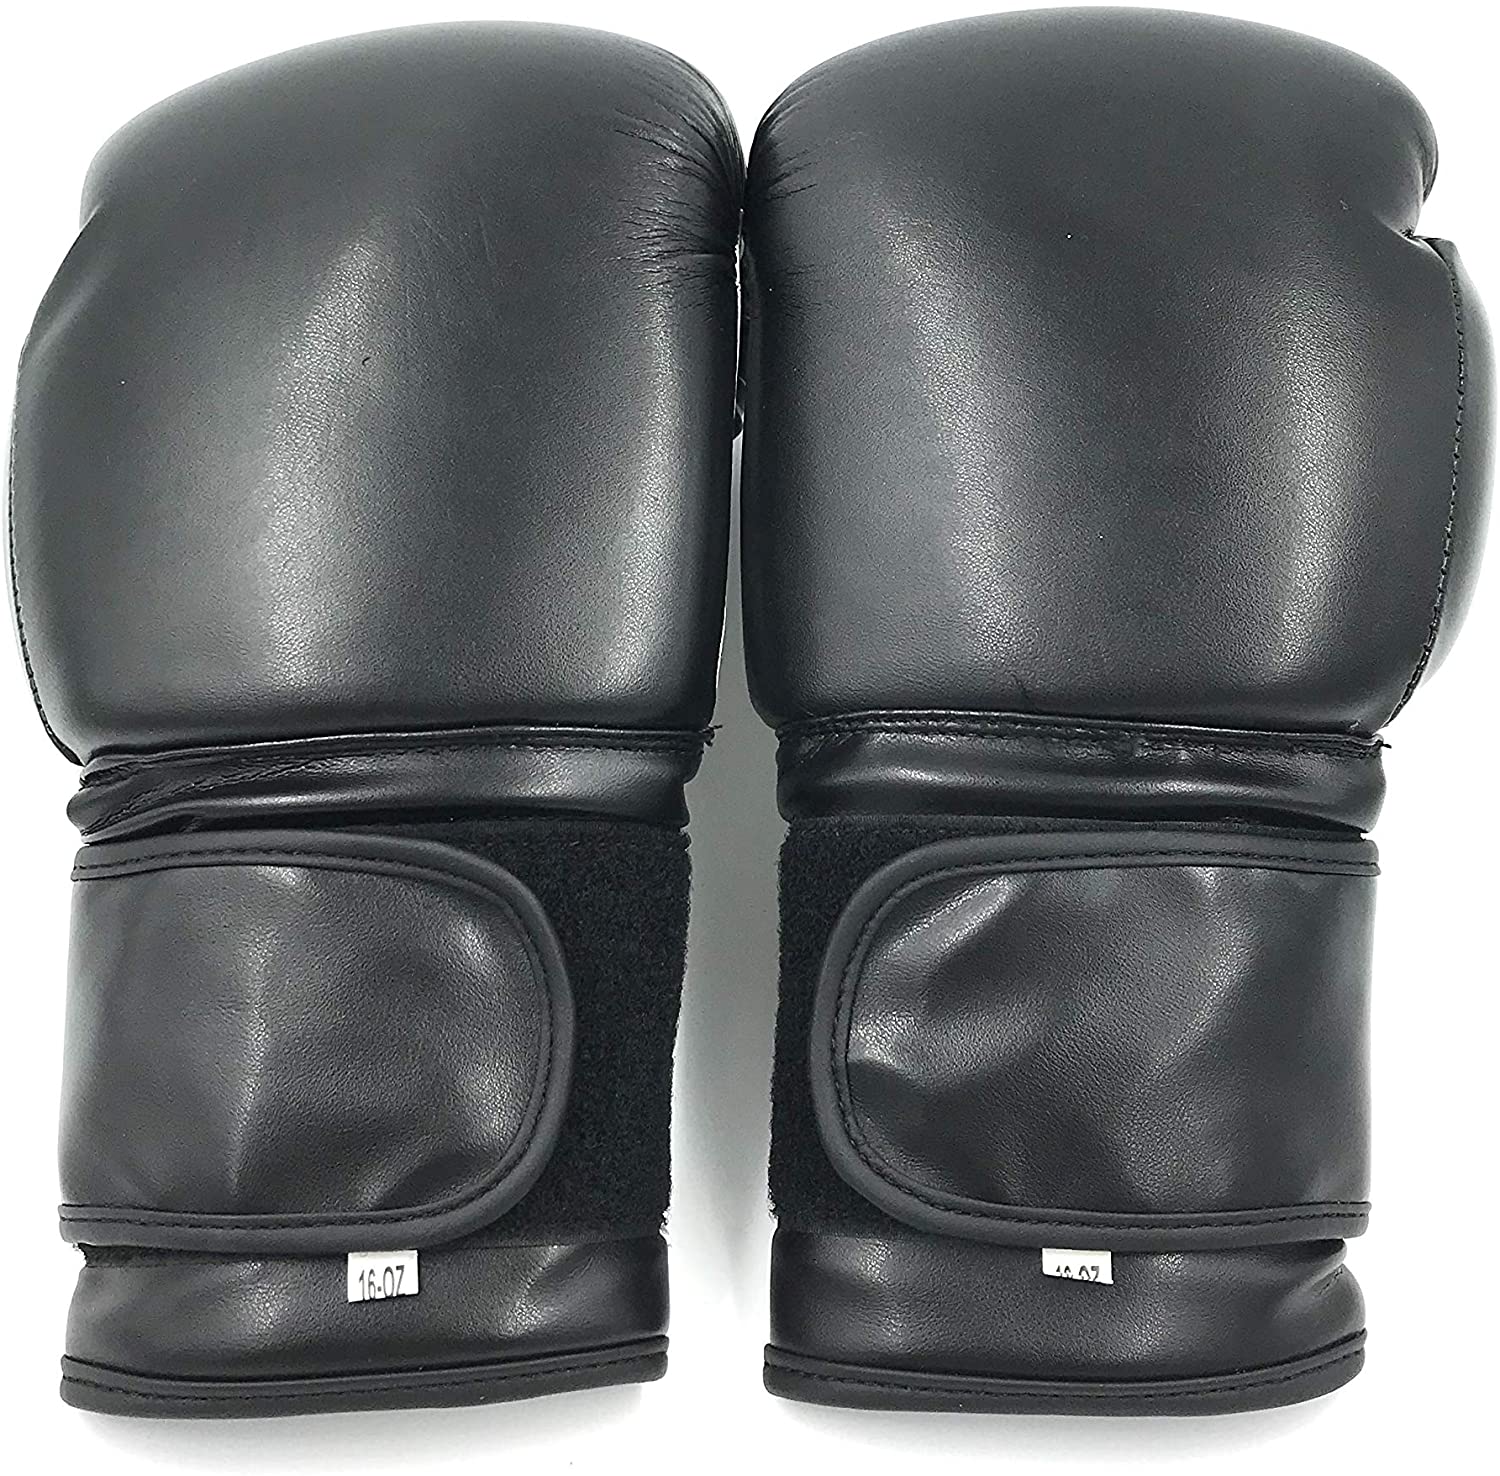 Woldorf USA Boxing Gloves Black Kickboxing, Grappling, Fighting Gloves ...